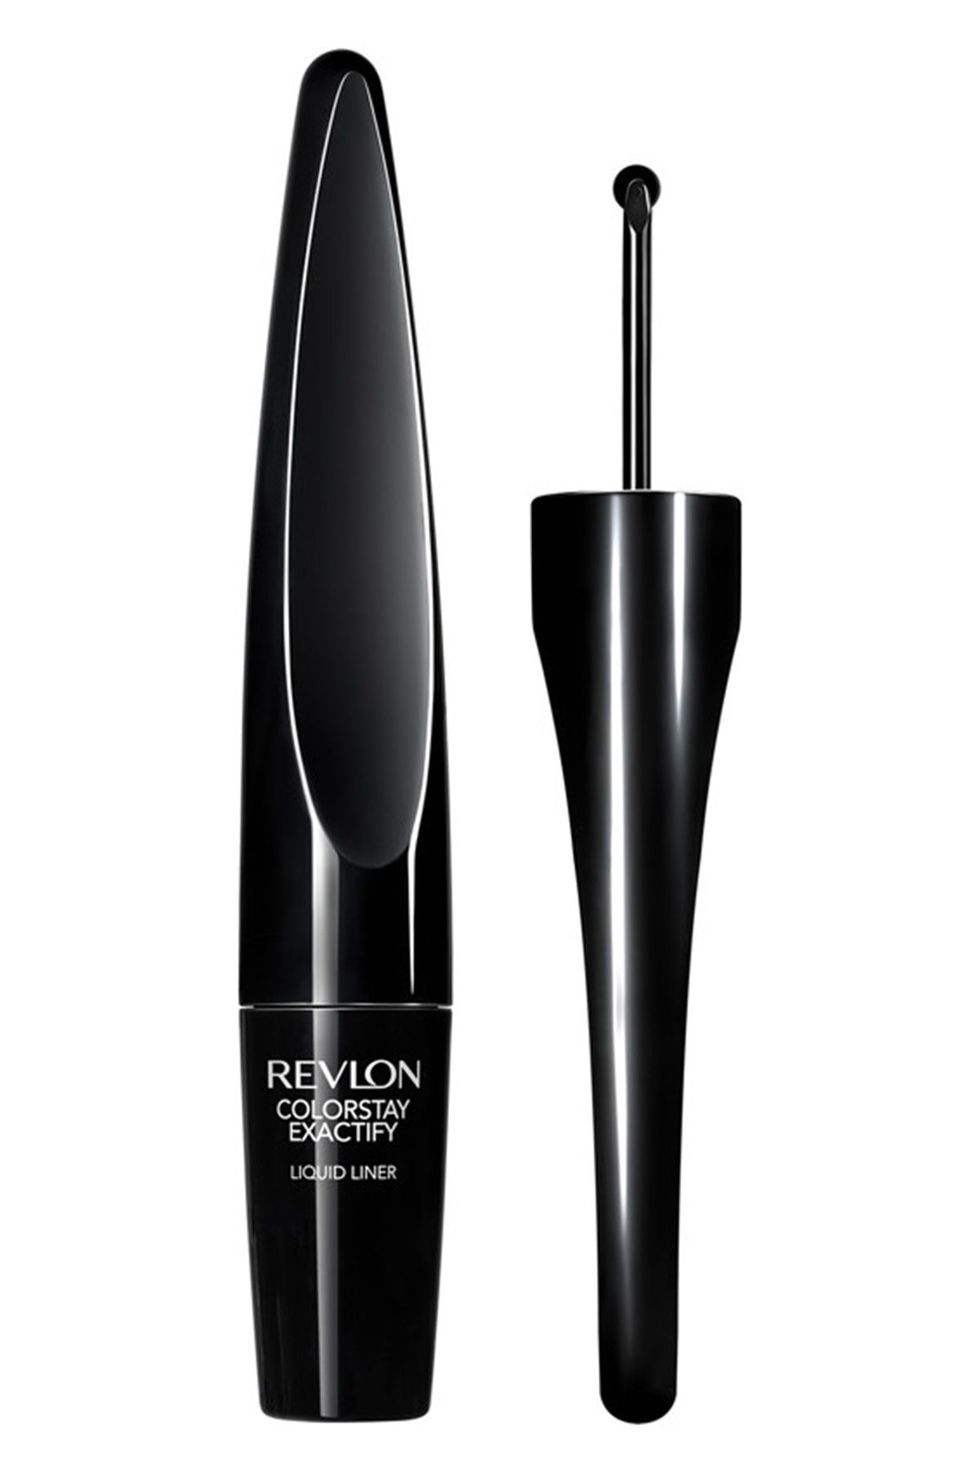 Beauty Breakthrough Award Winner: Revlon ColorStay Exactify Liquid Liner